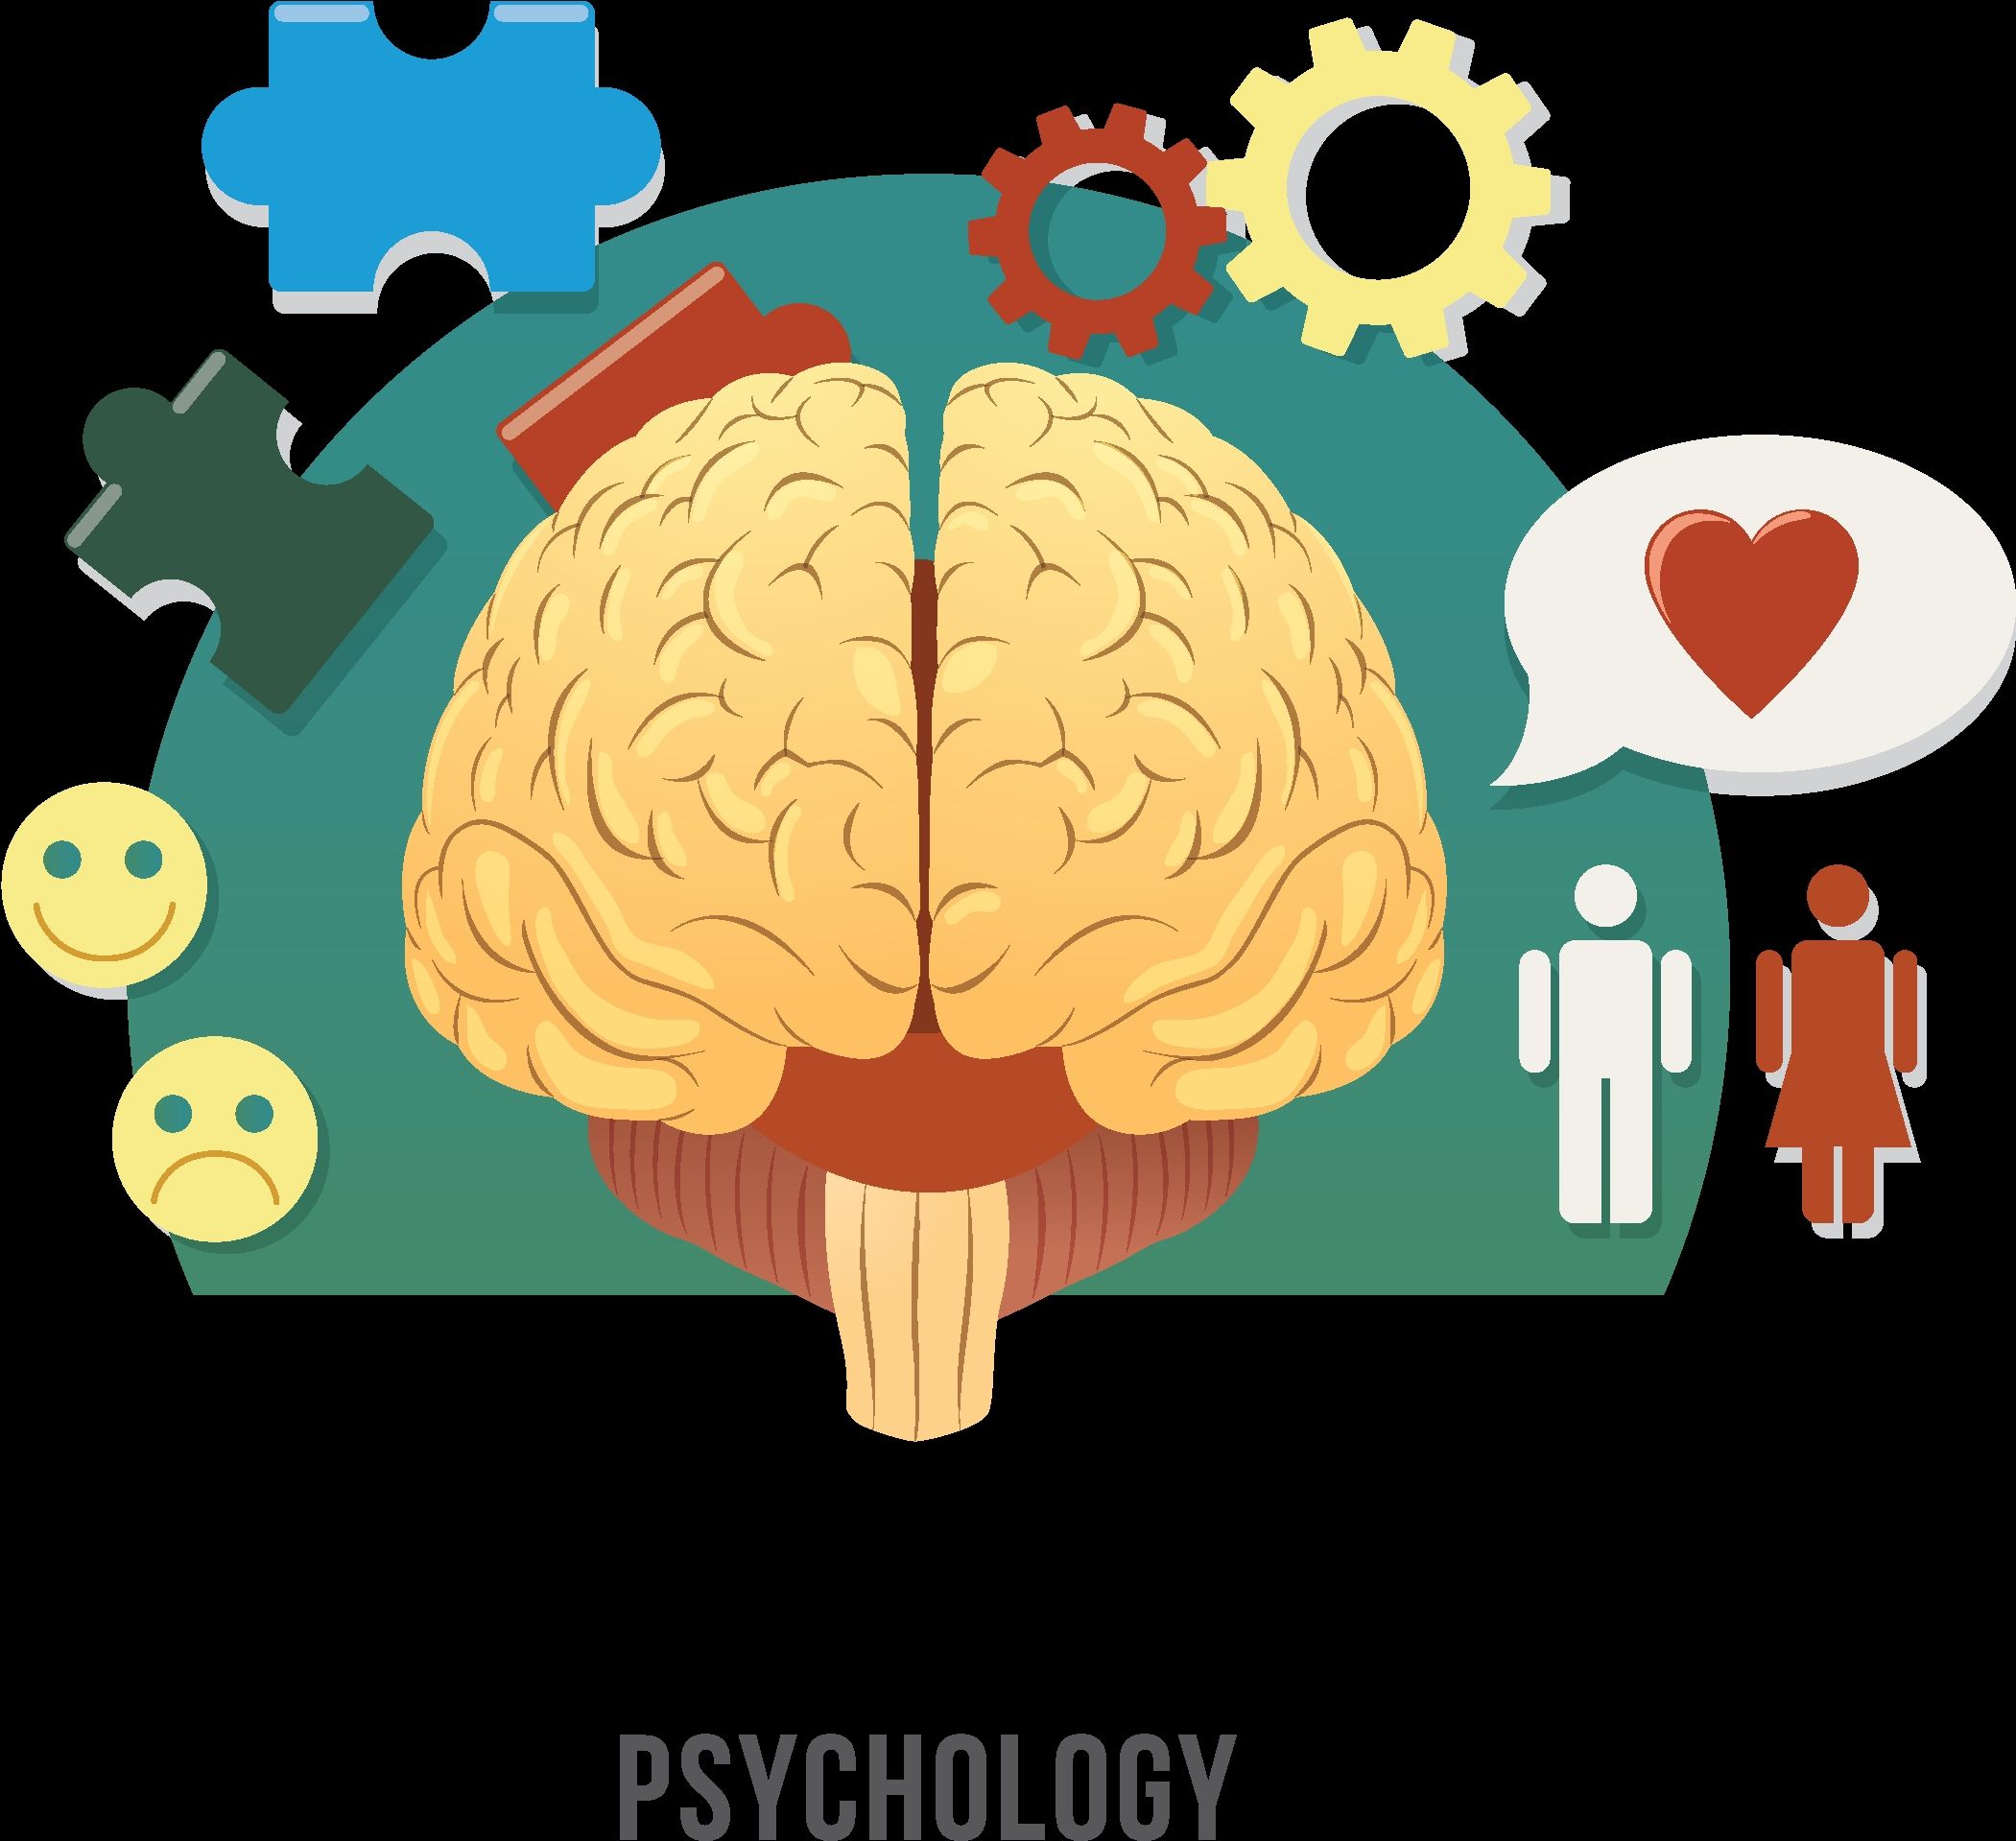 Psychologist Clipart Image. Clip art, Free clip art, Cute cartoon wallpaper